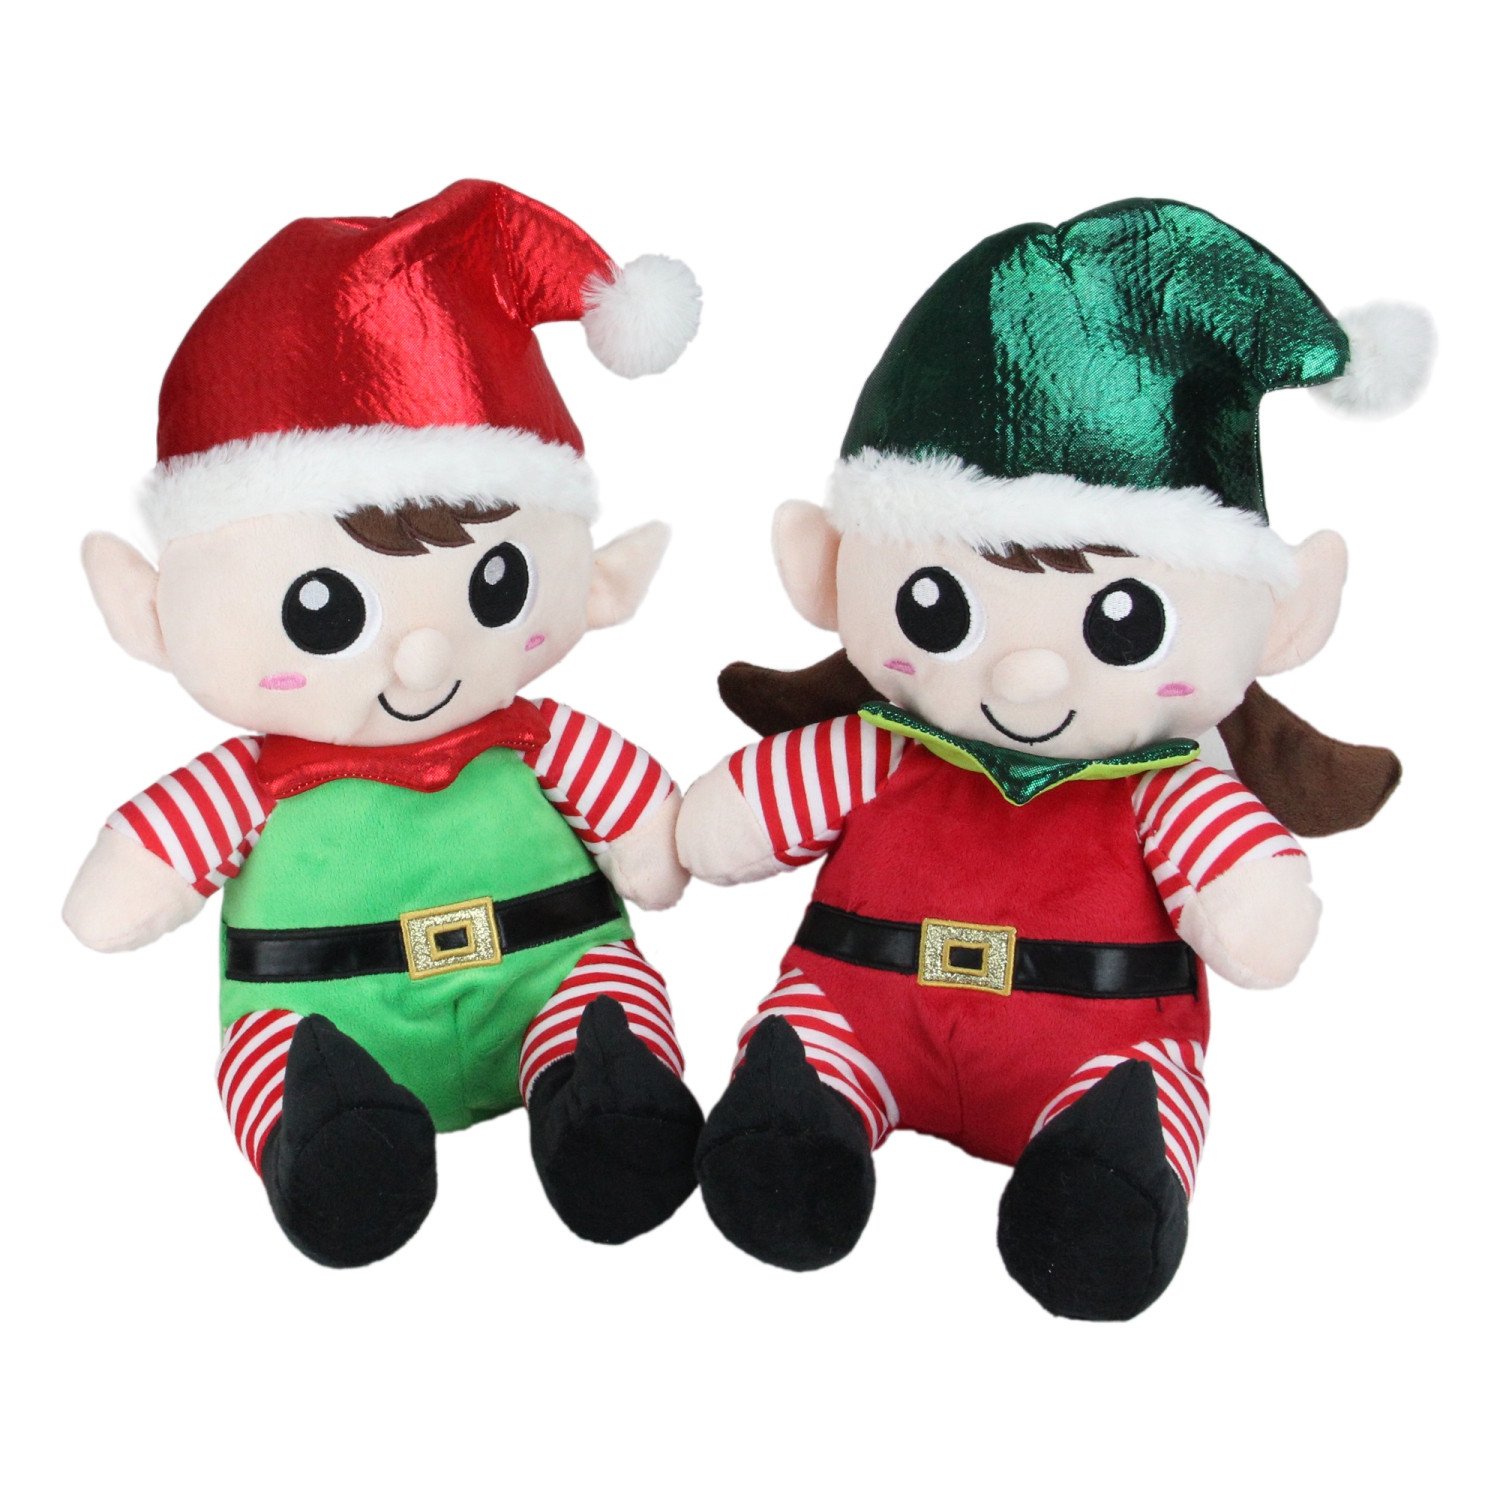 Set of 2 Red Plush Sitting Boy and Girl Christmas Elf Figures 13"